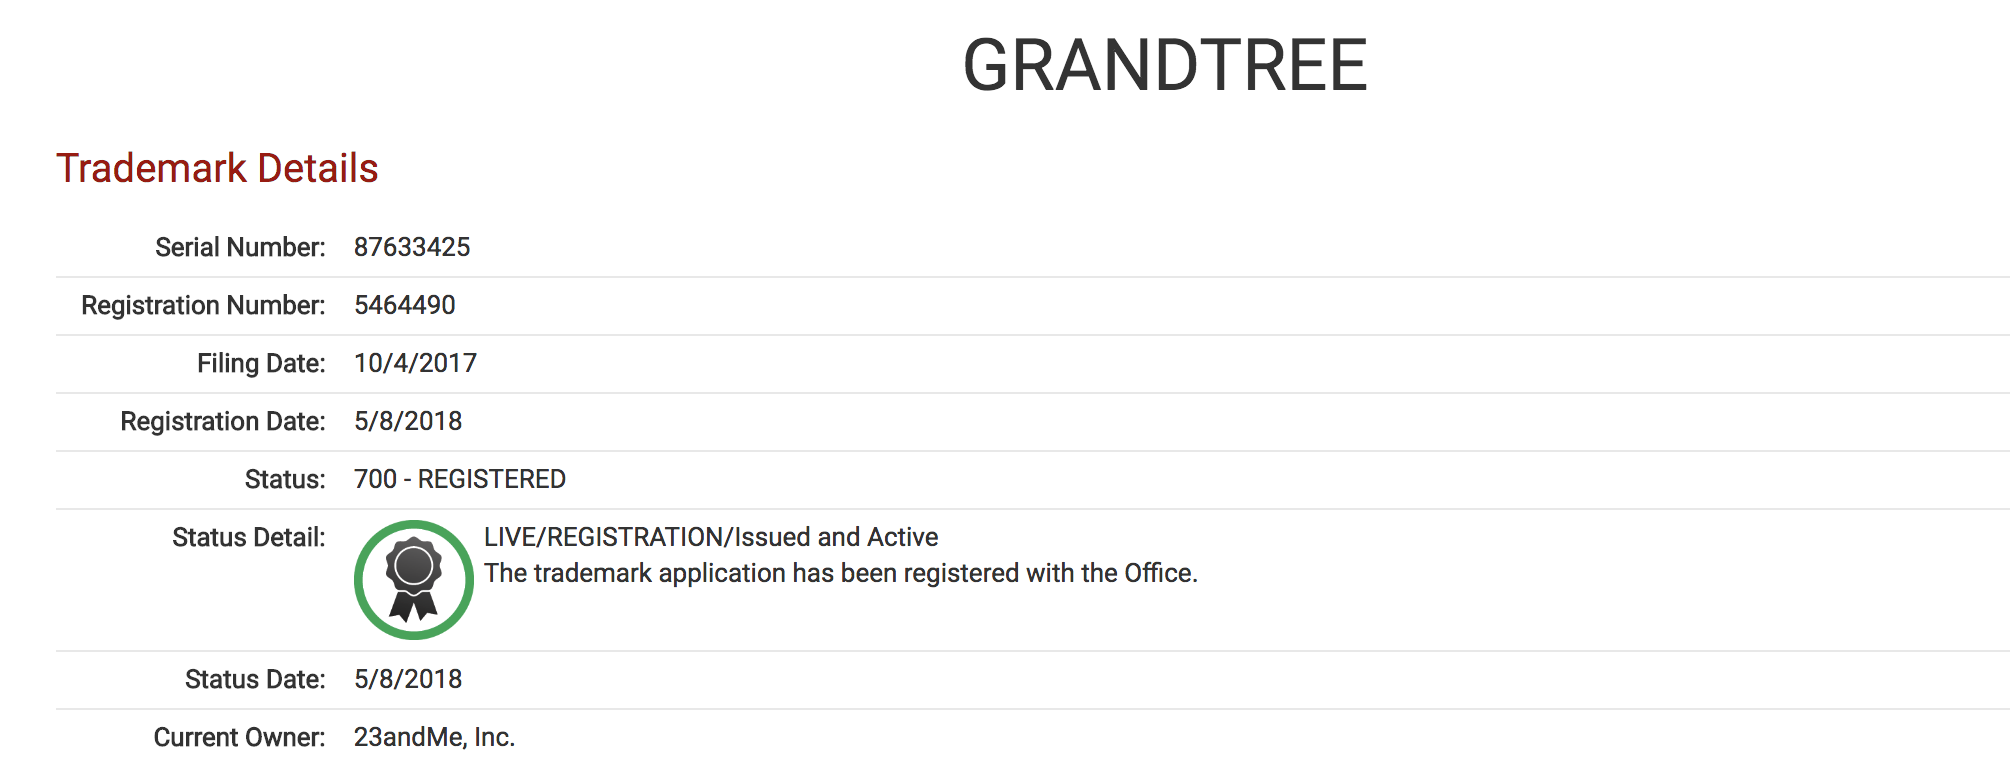 Grandtree Trademark